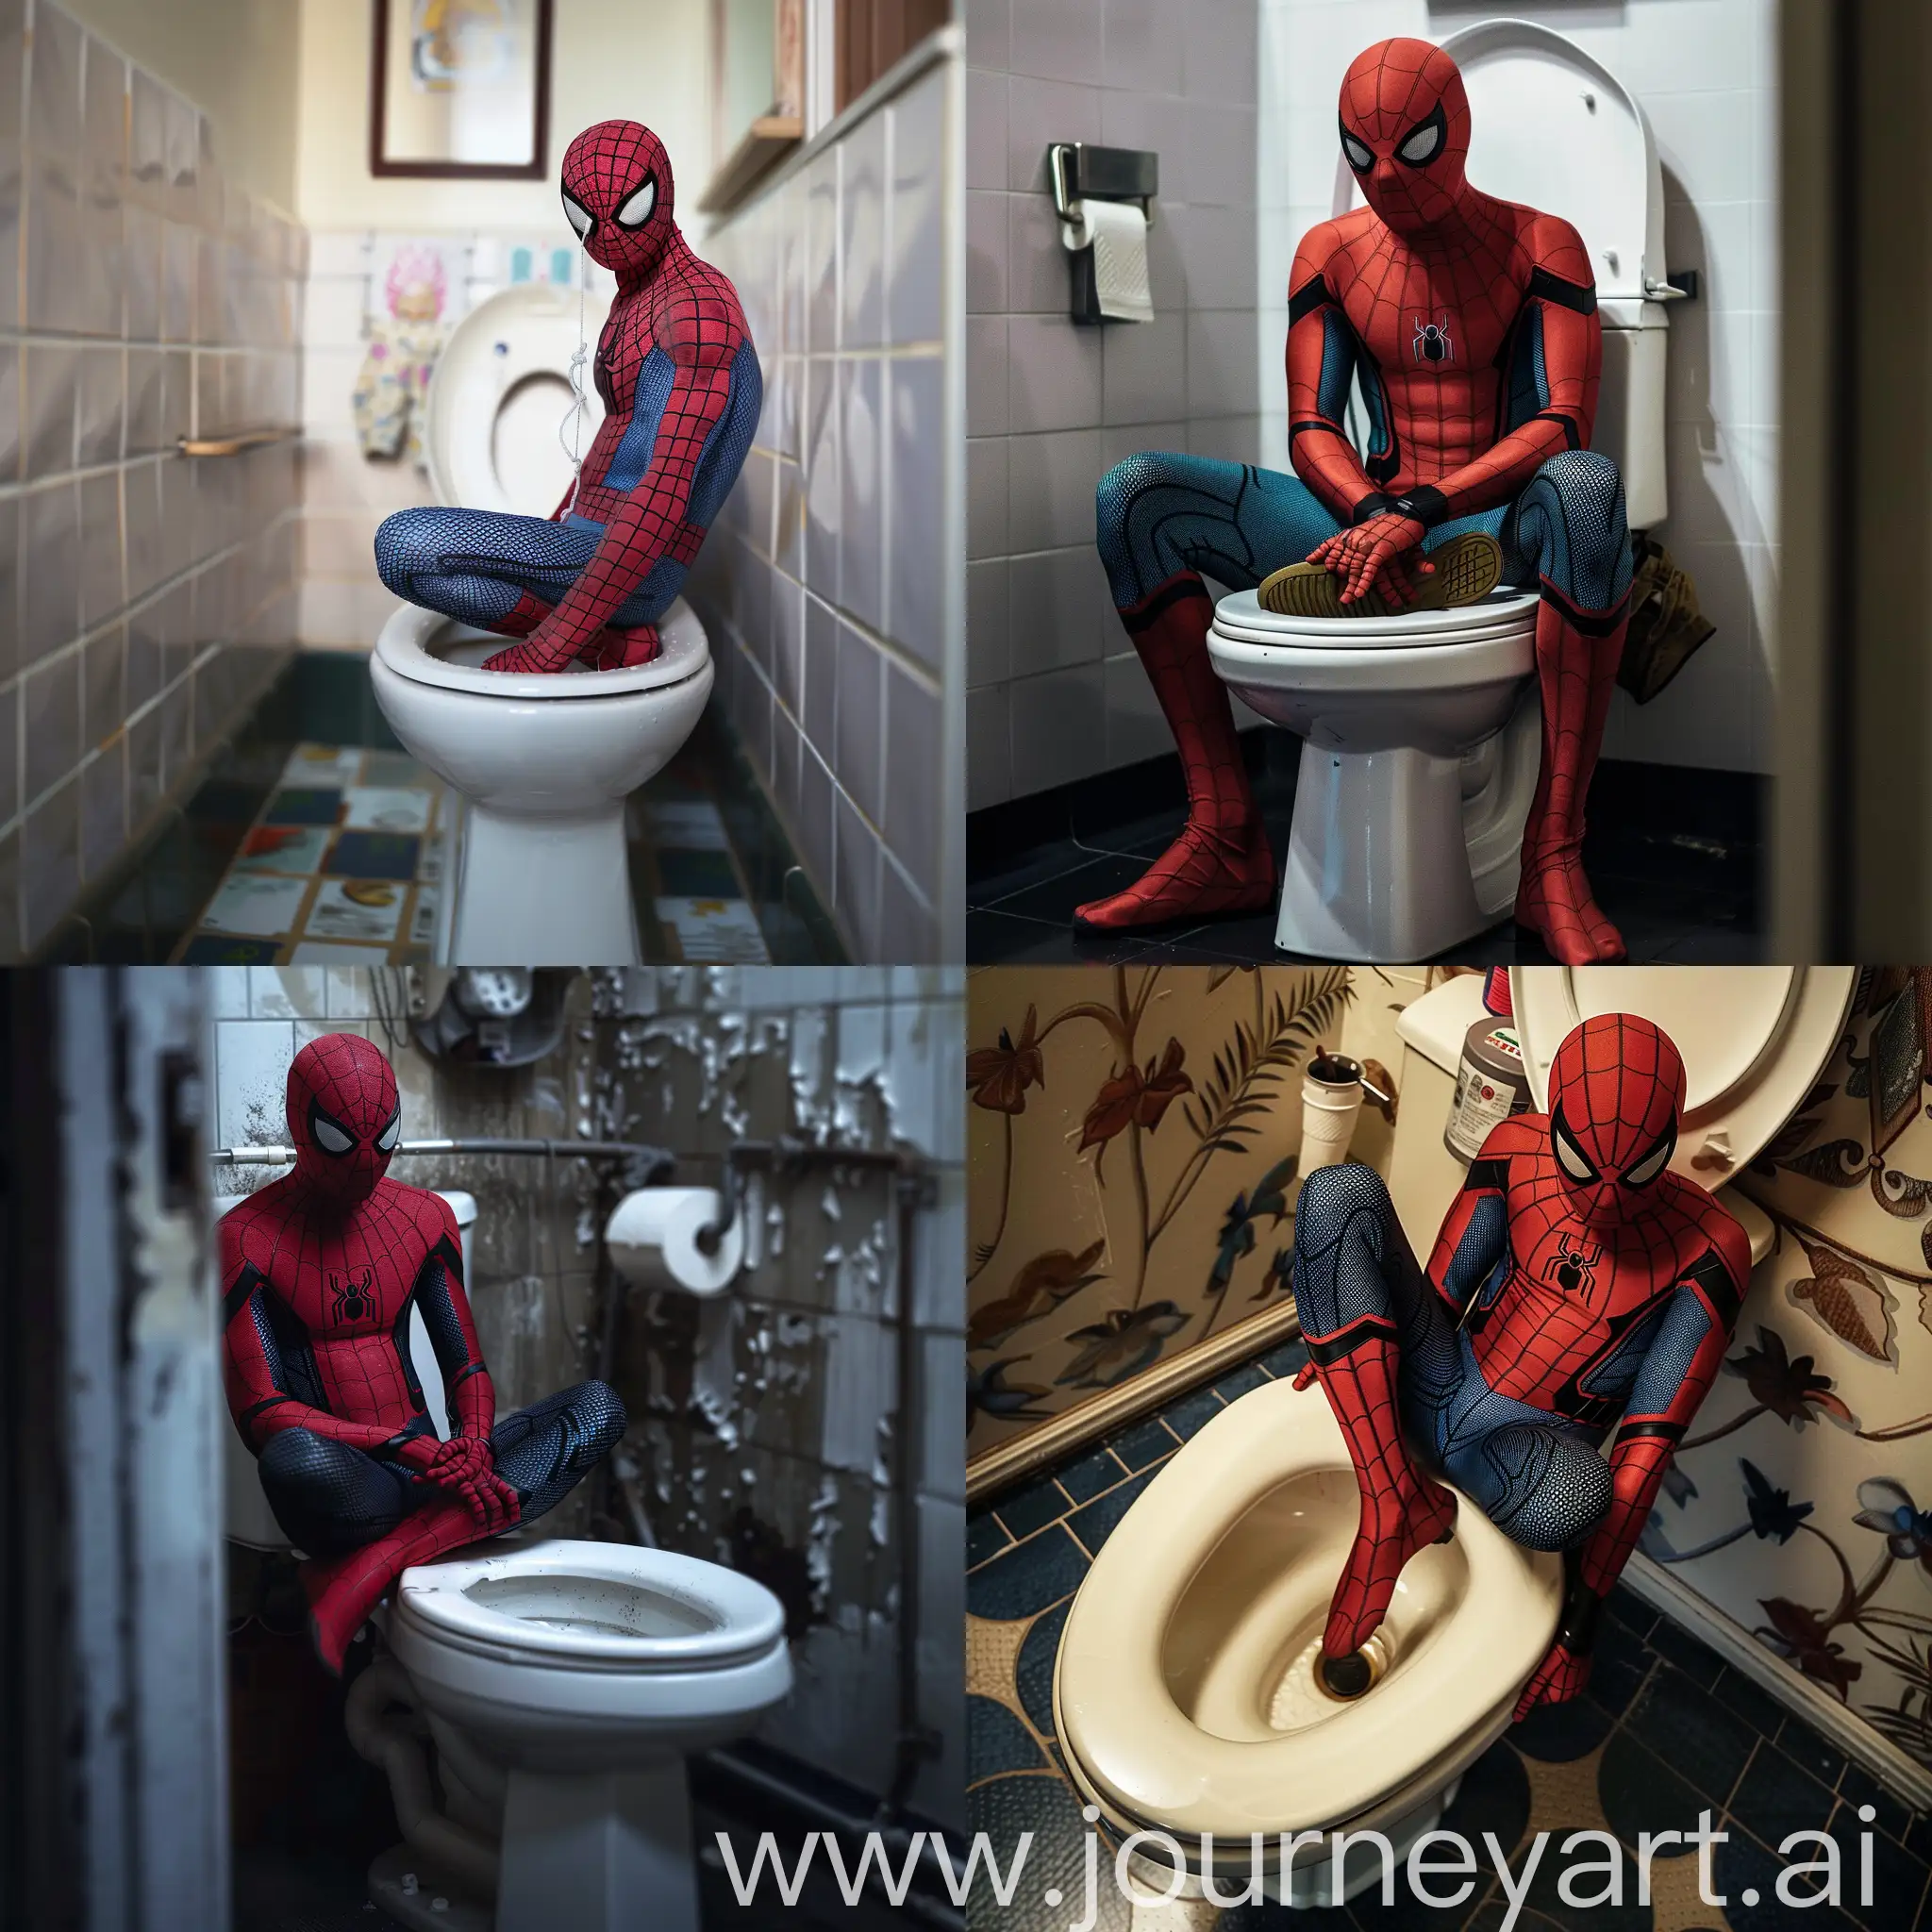 spiderman on the toilet